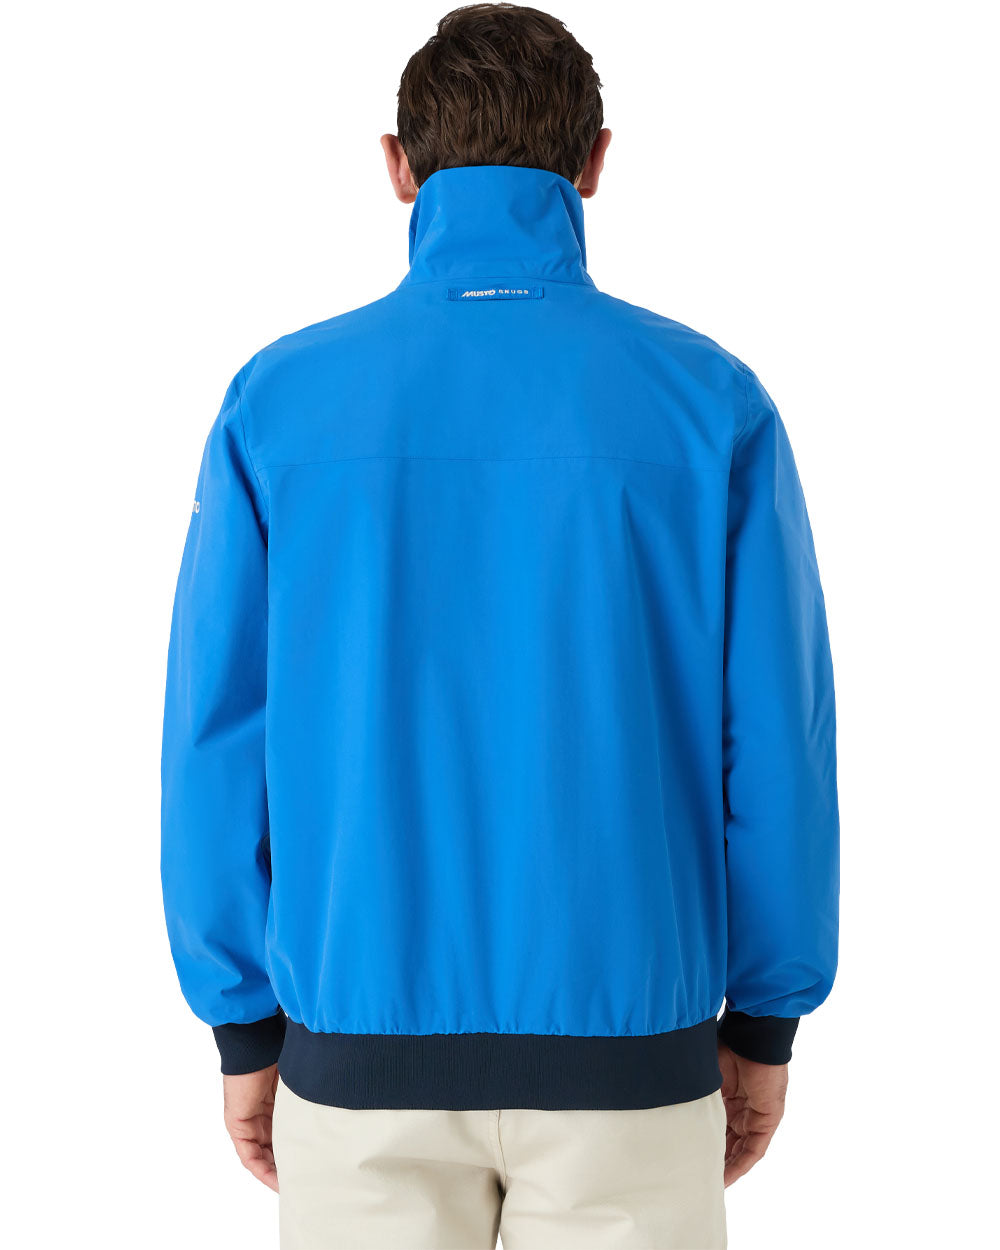 Aruba Blue coloured Musto Snug Blouson Jacket on White background 